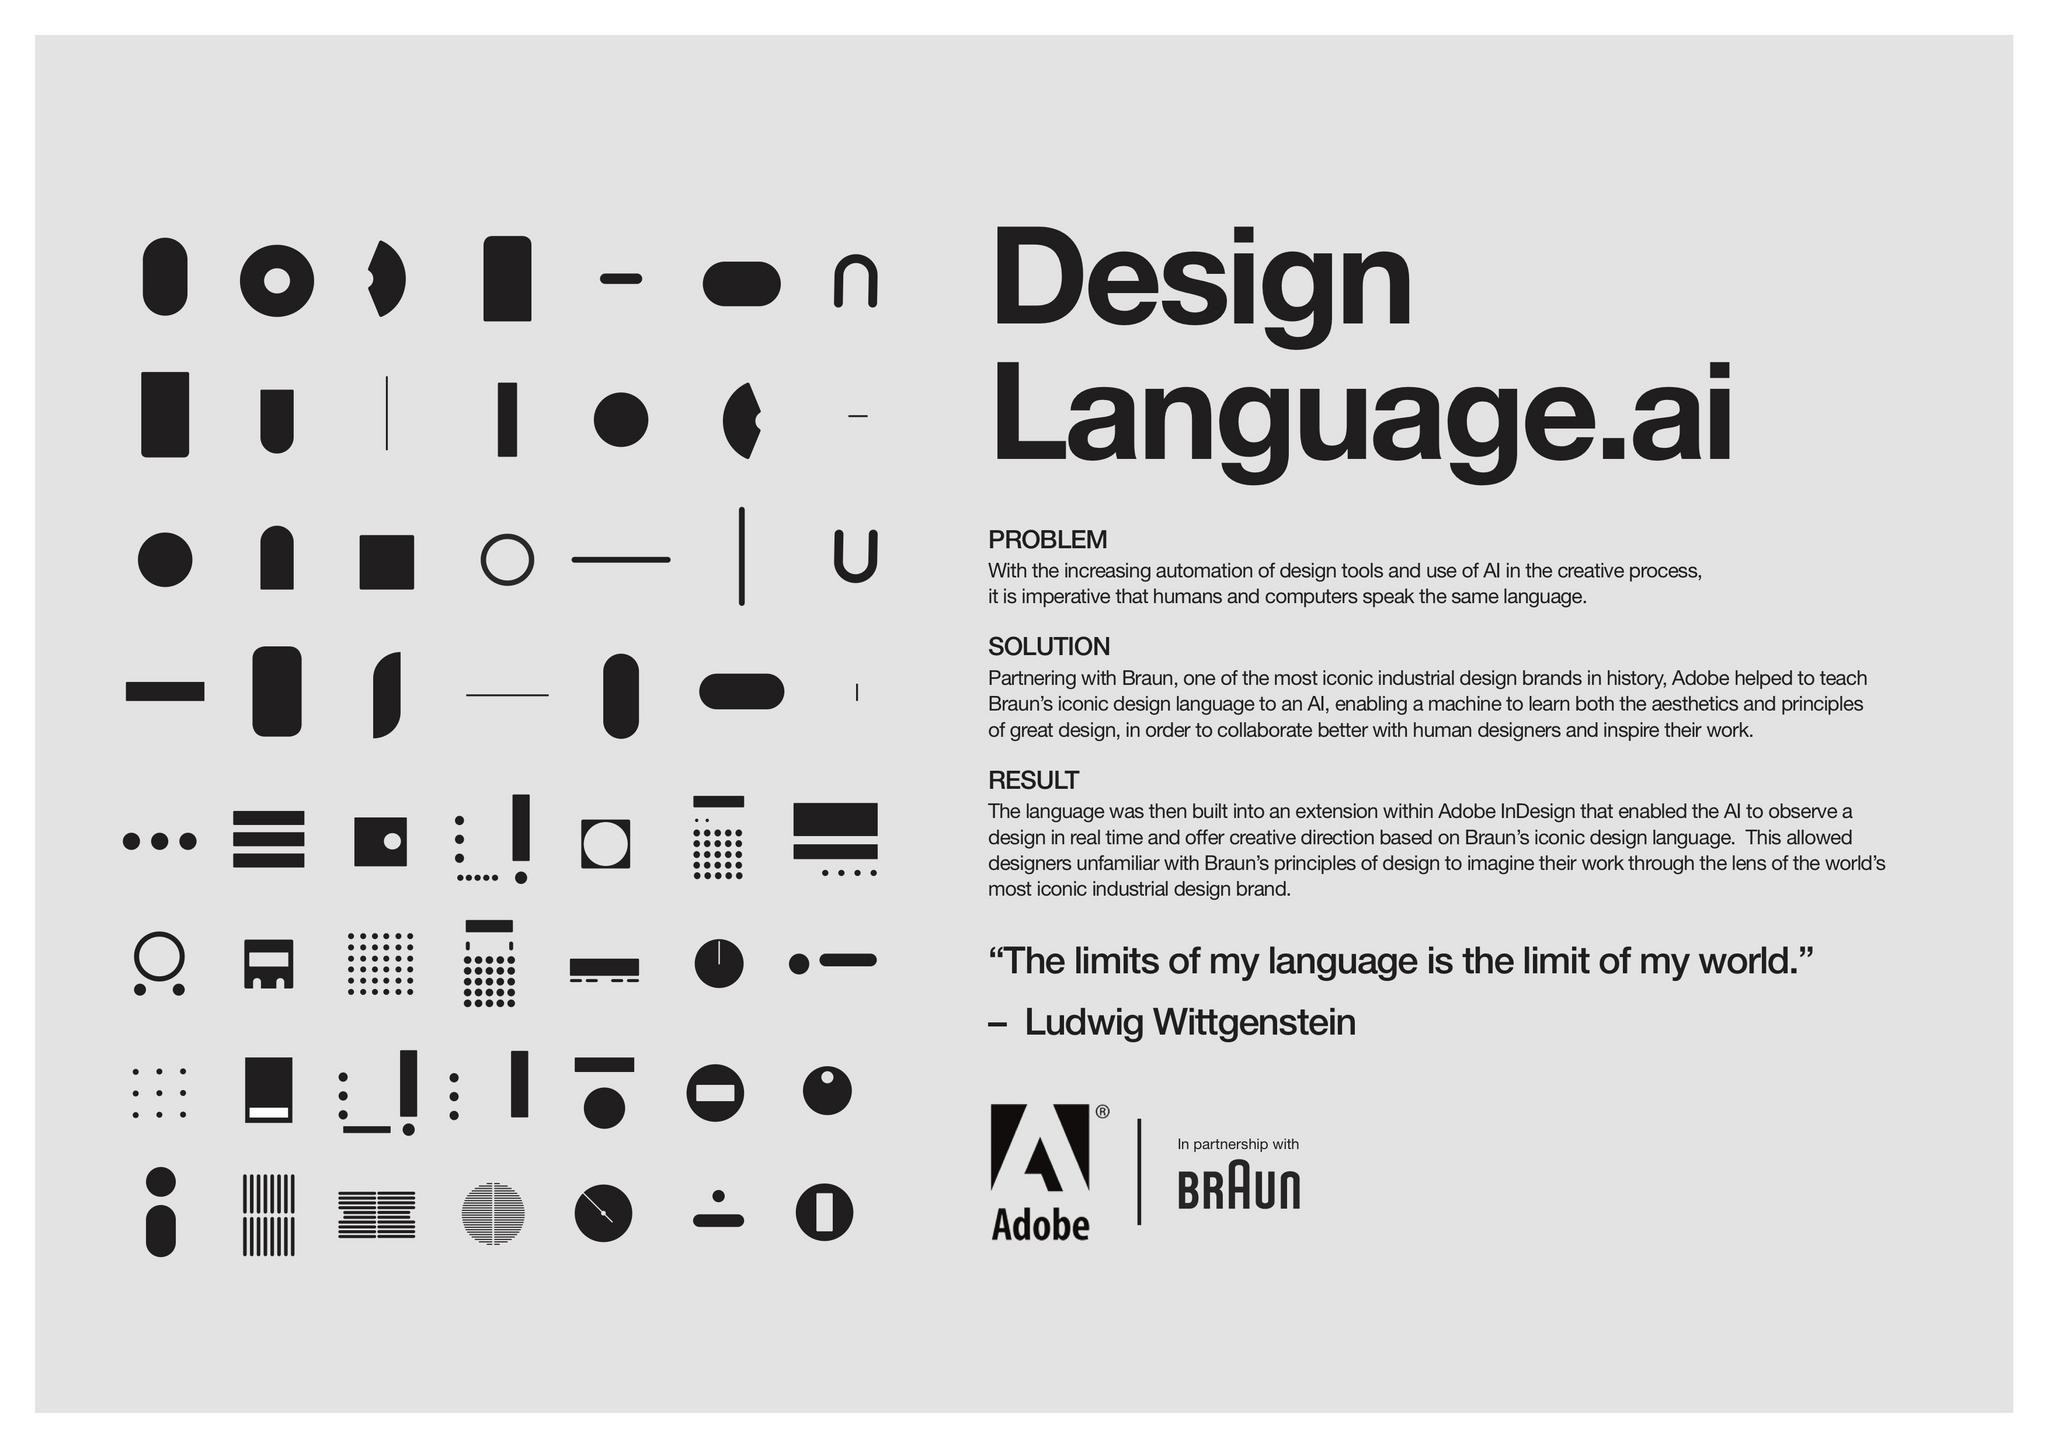 Design Language.ai